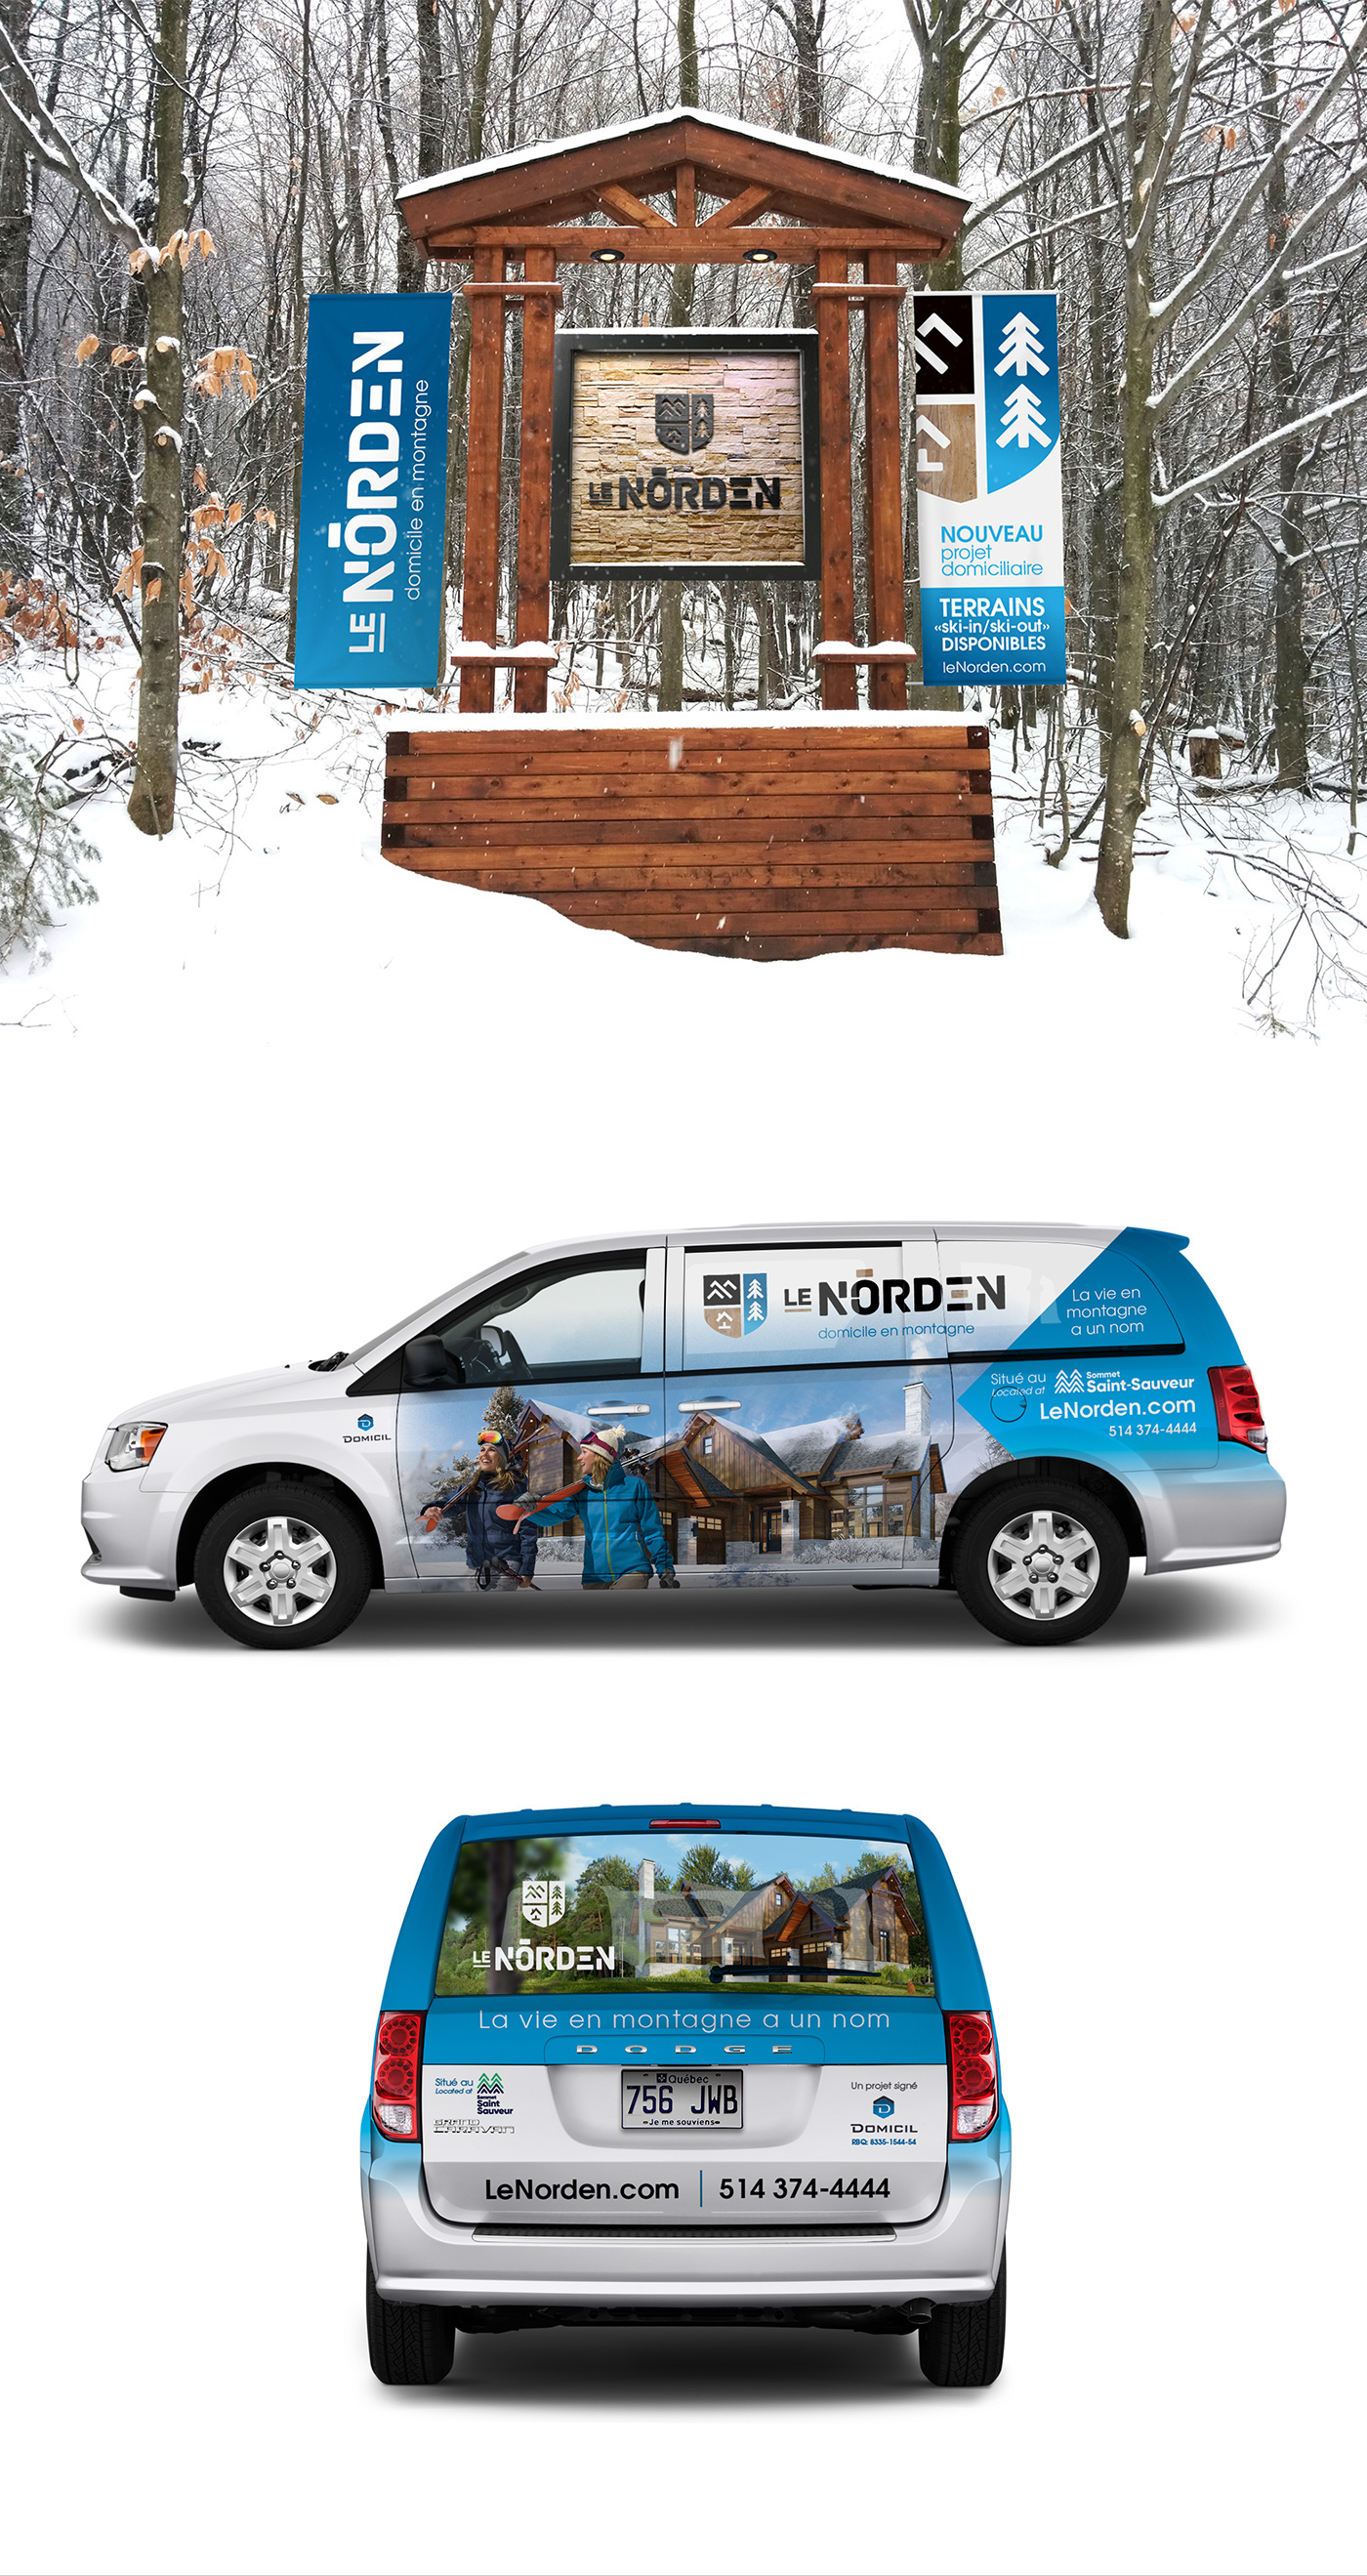 logo branding  Website brochure real estate residential nordic winter